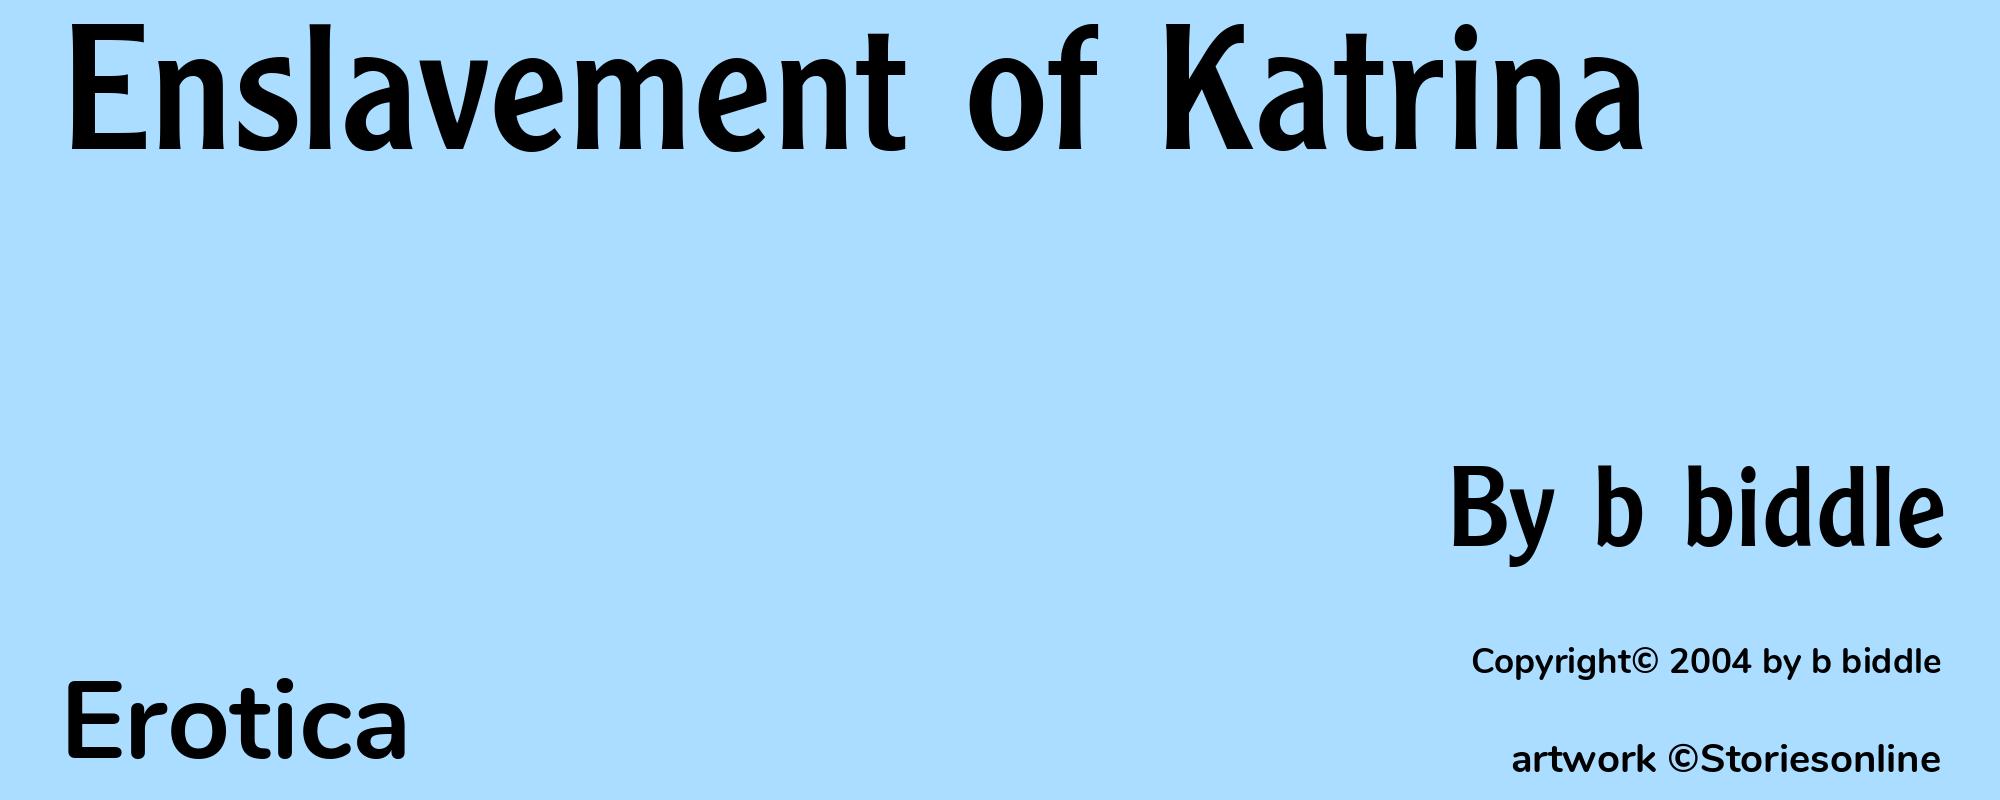 Enslavement of Katrina - Cover